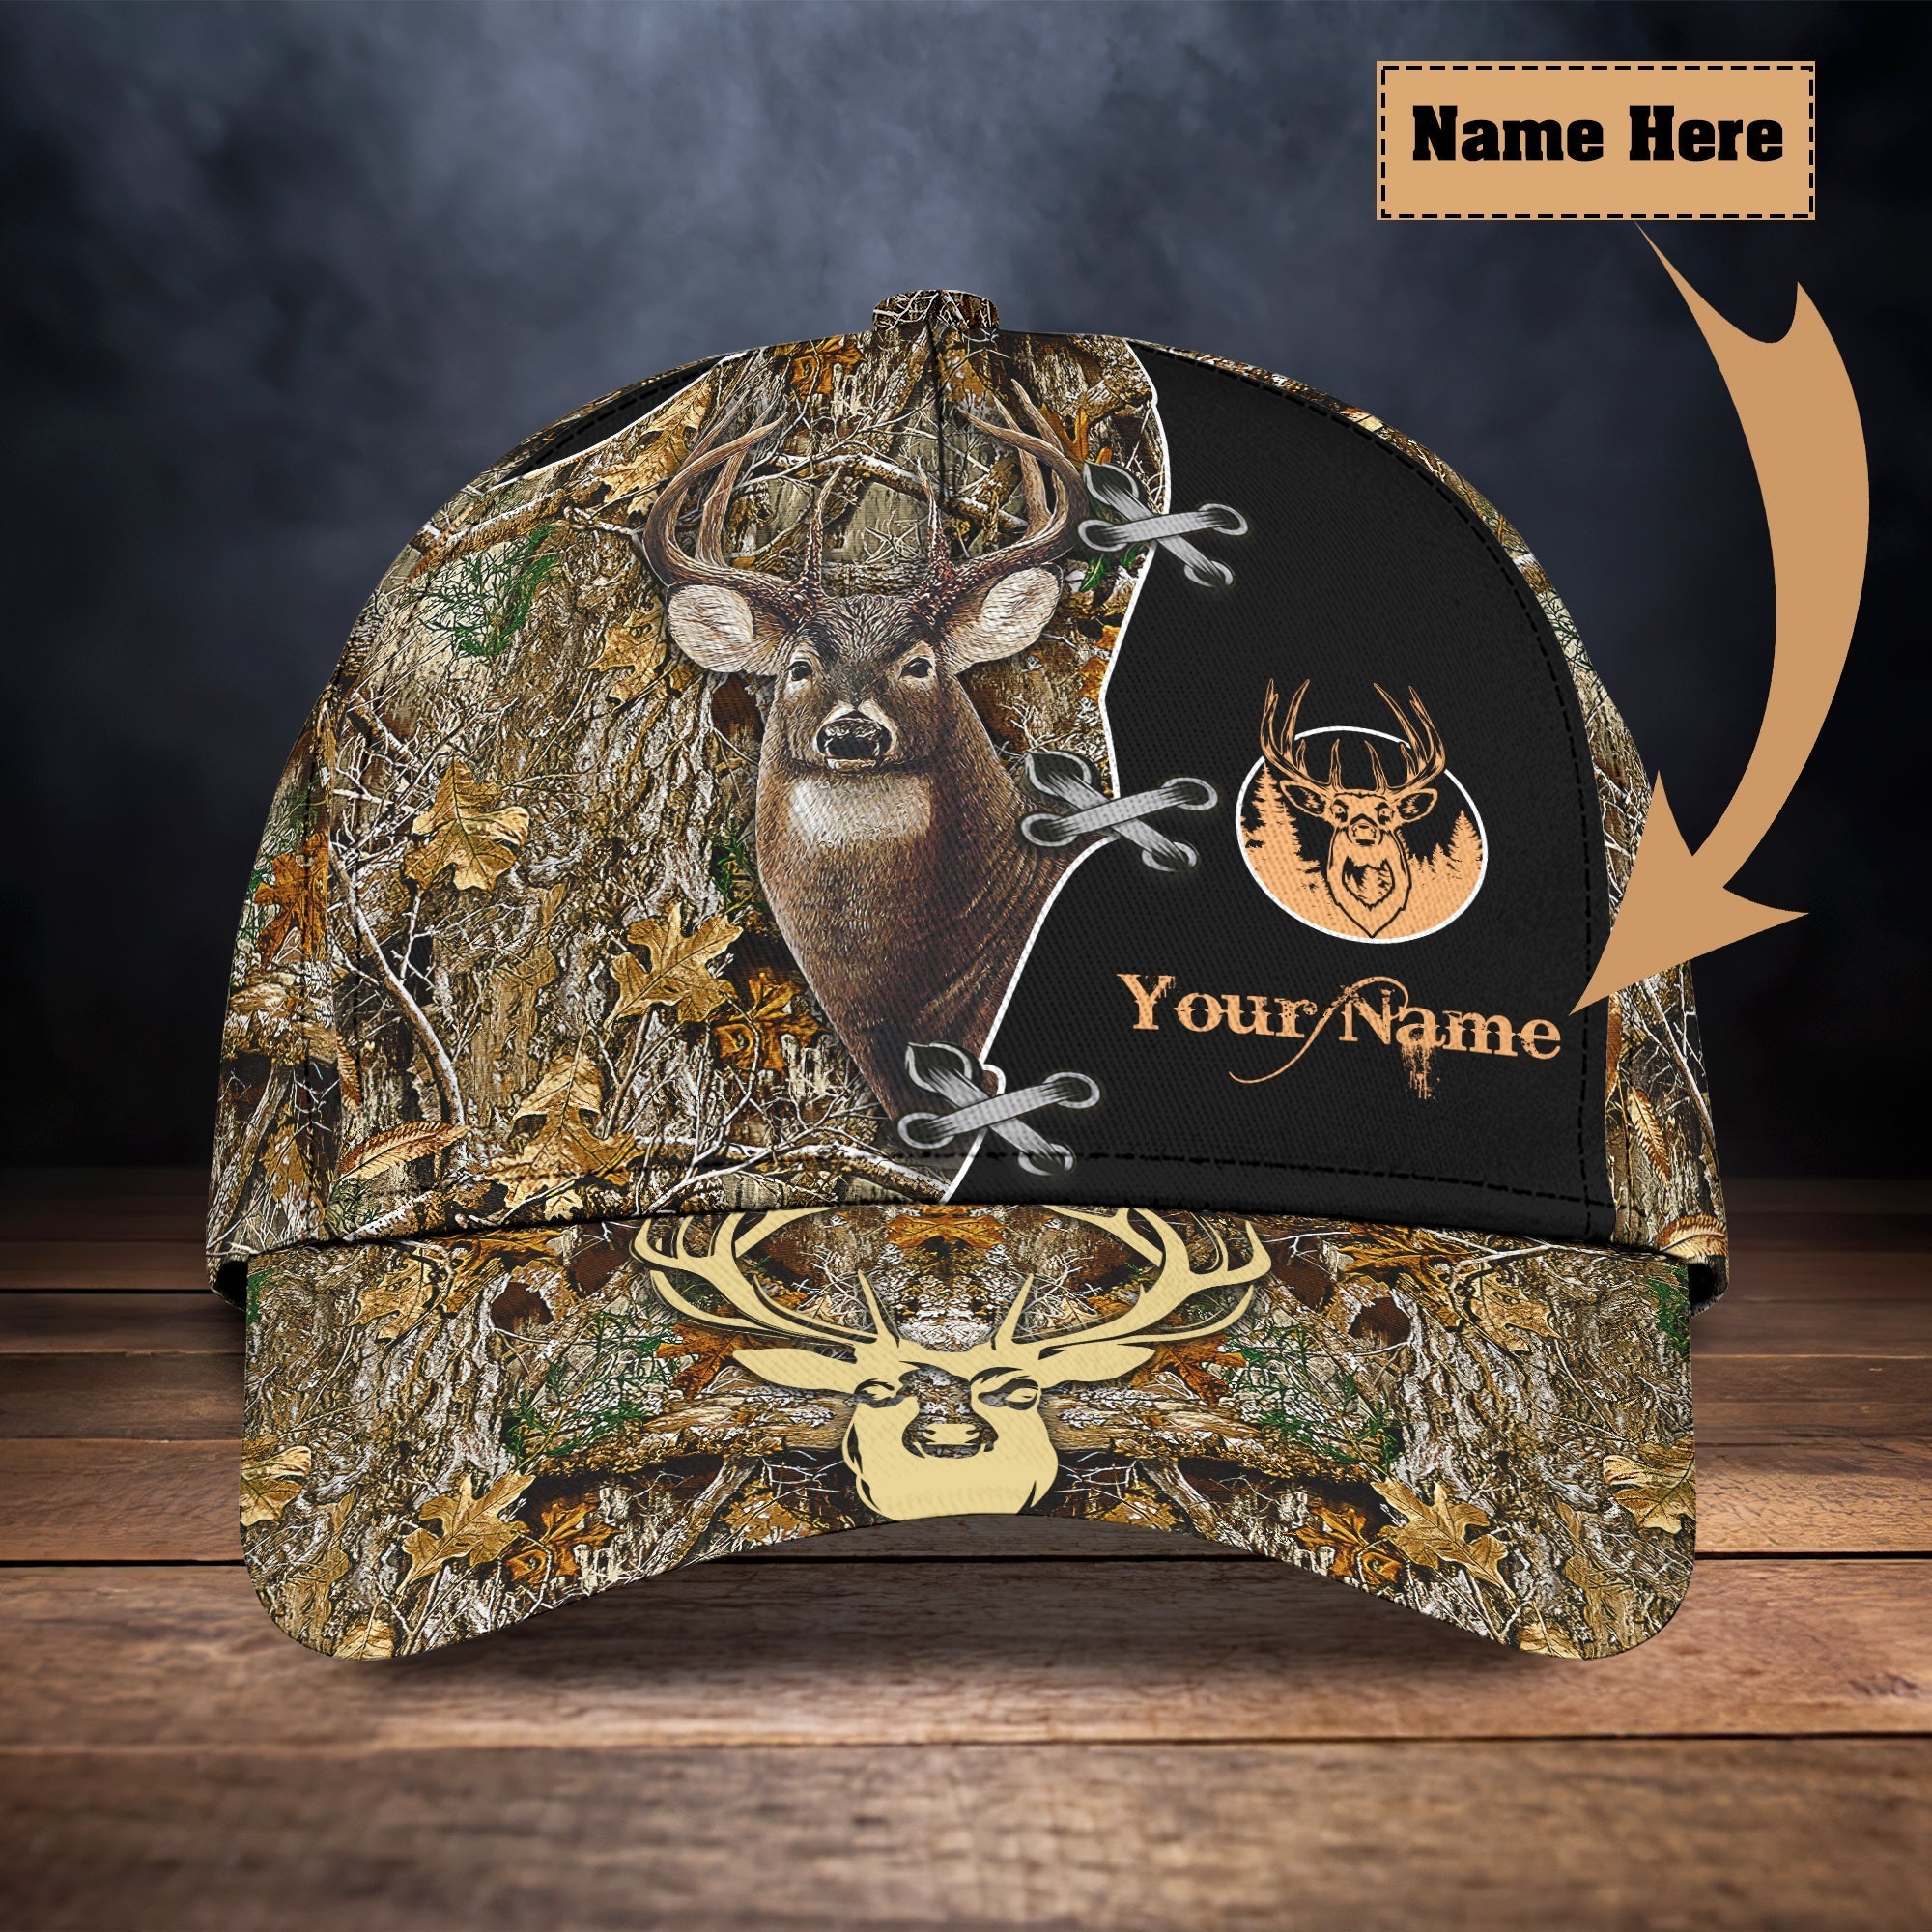 Customized Hunting Cap For Dad/ 3D Full Printed Deer Hunting Hat Cap For Man And Women/ Deer Hunting Cap Hat